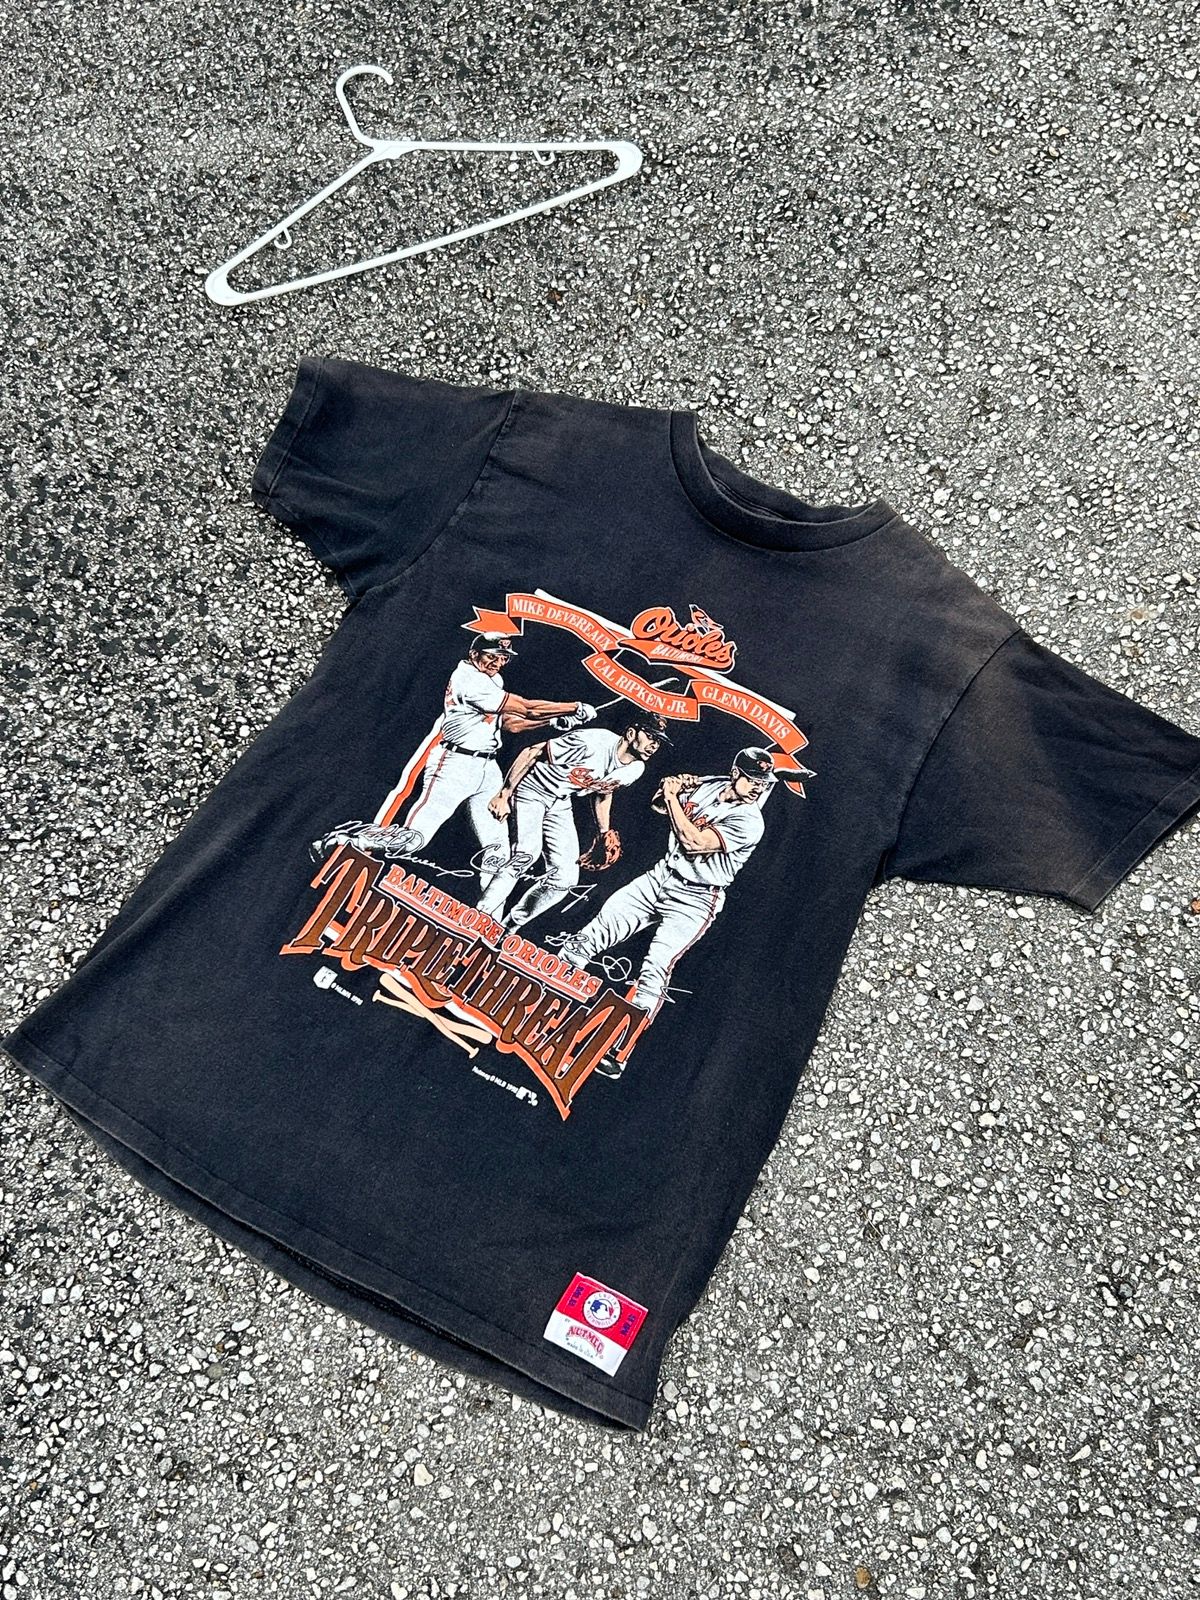 Nutmeg Mills Vintage Nutmeg Mills Baltimore Orioles shirt-size:XL Size US XL / EU 56 / 4 - 1 Preview